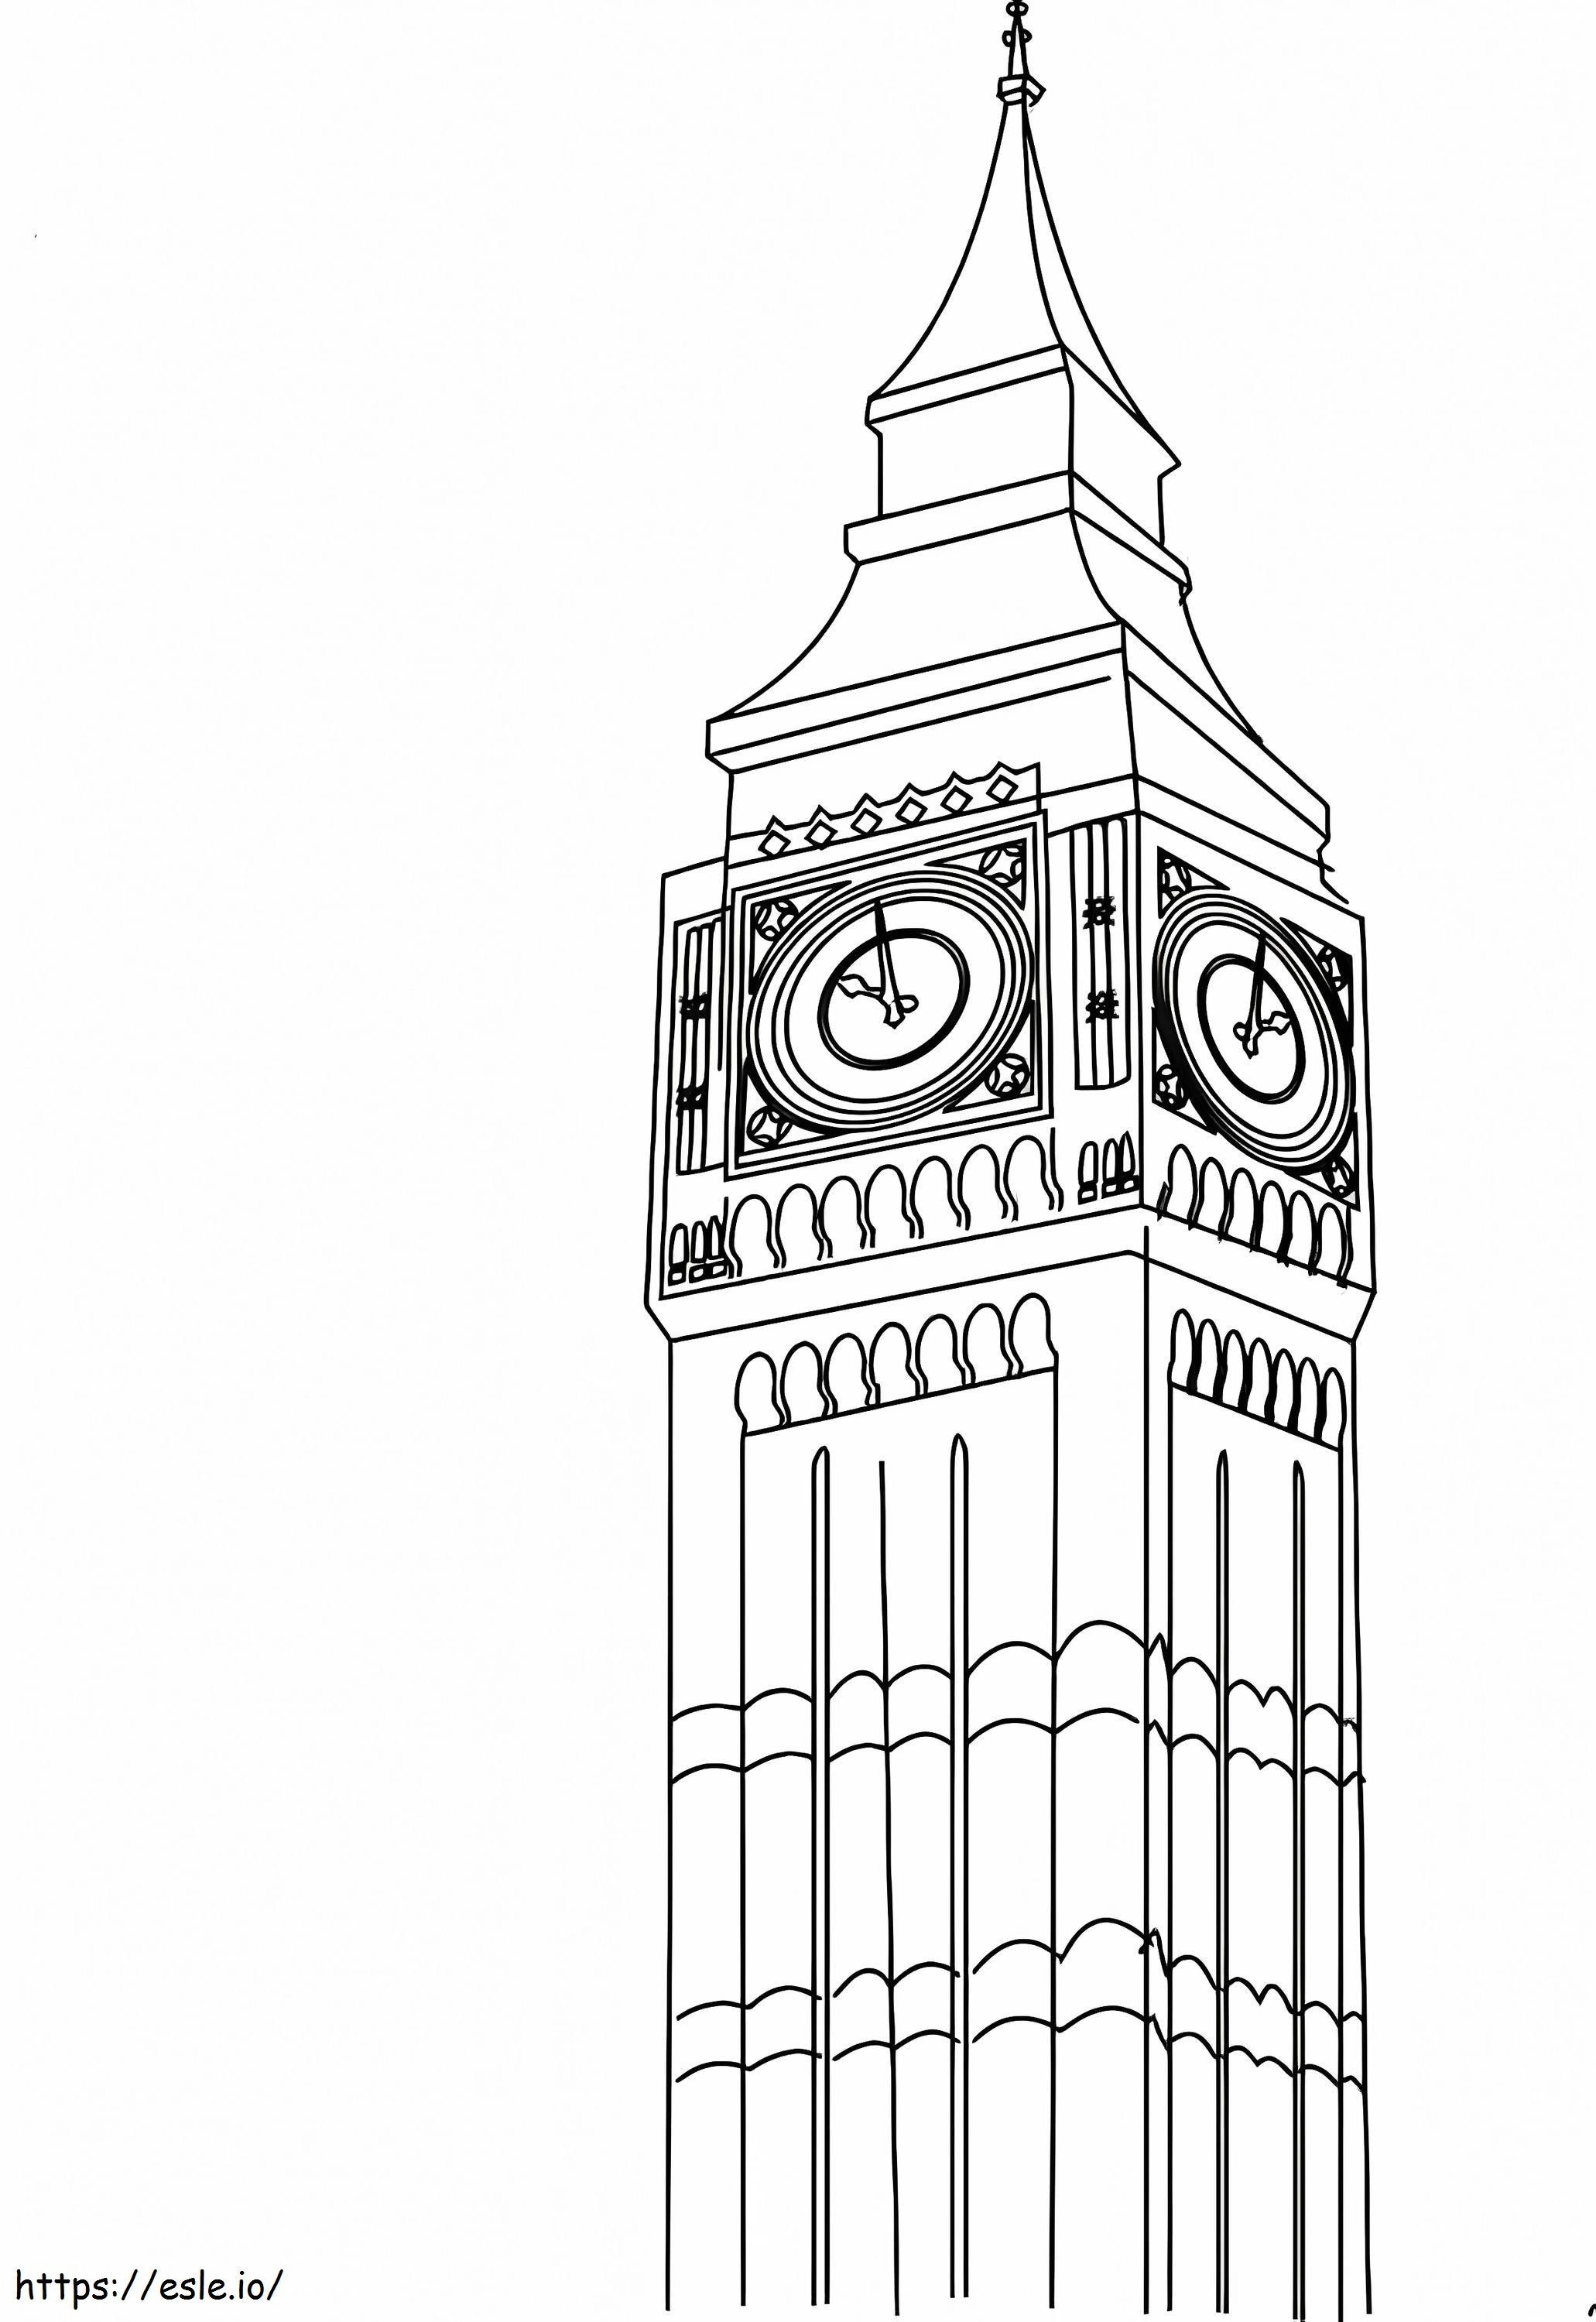 Big Ben Clock Tower coloring page